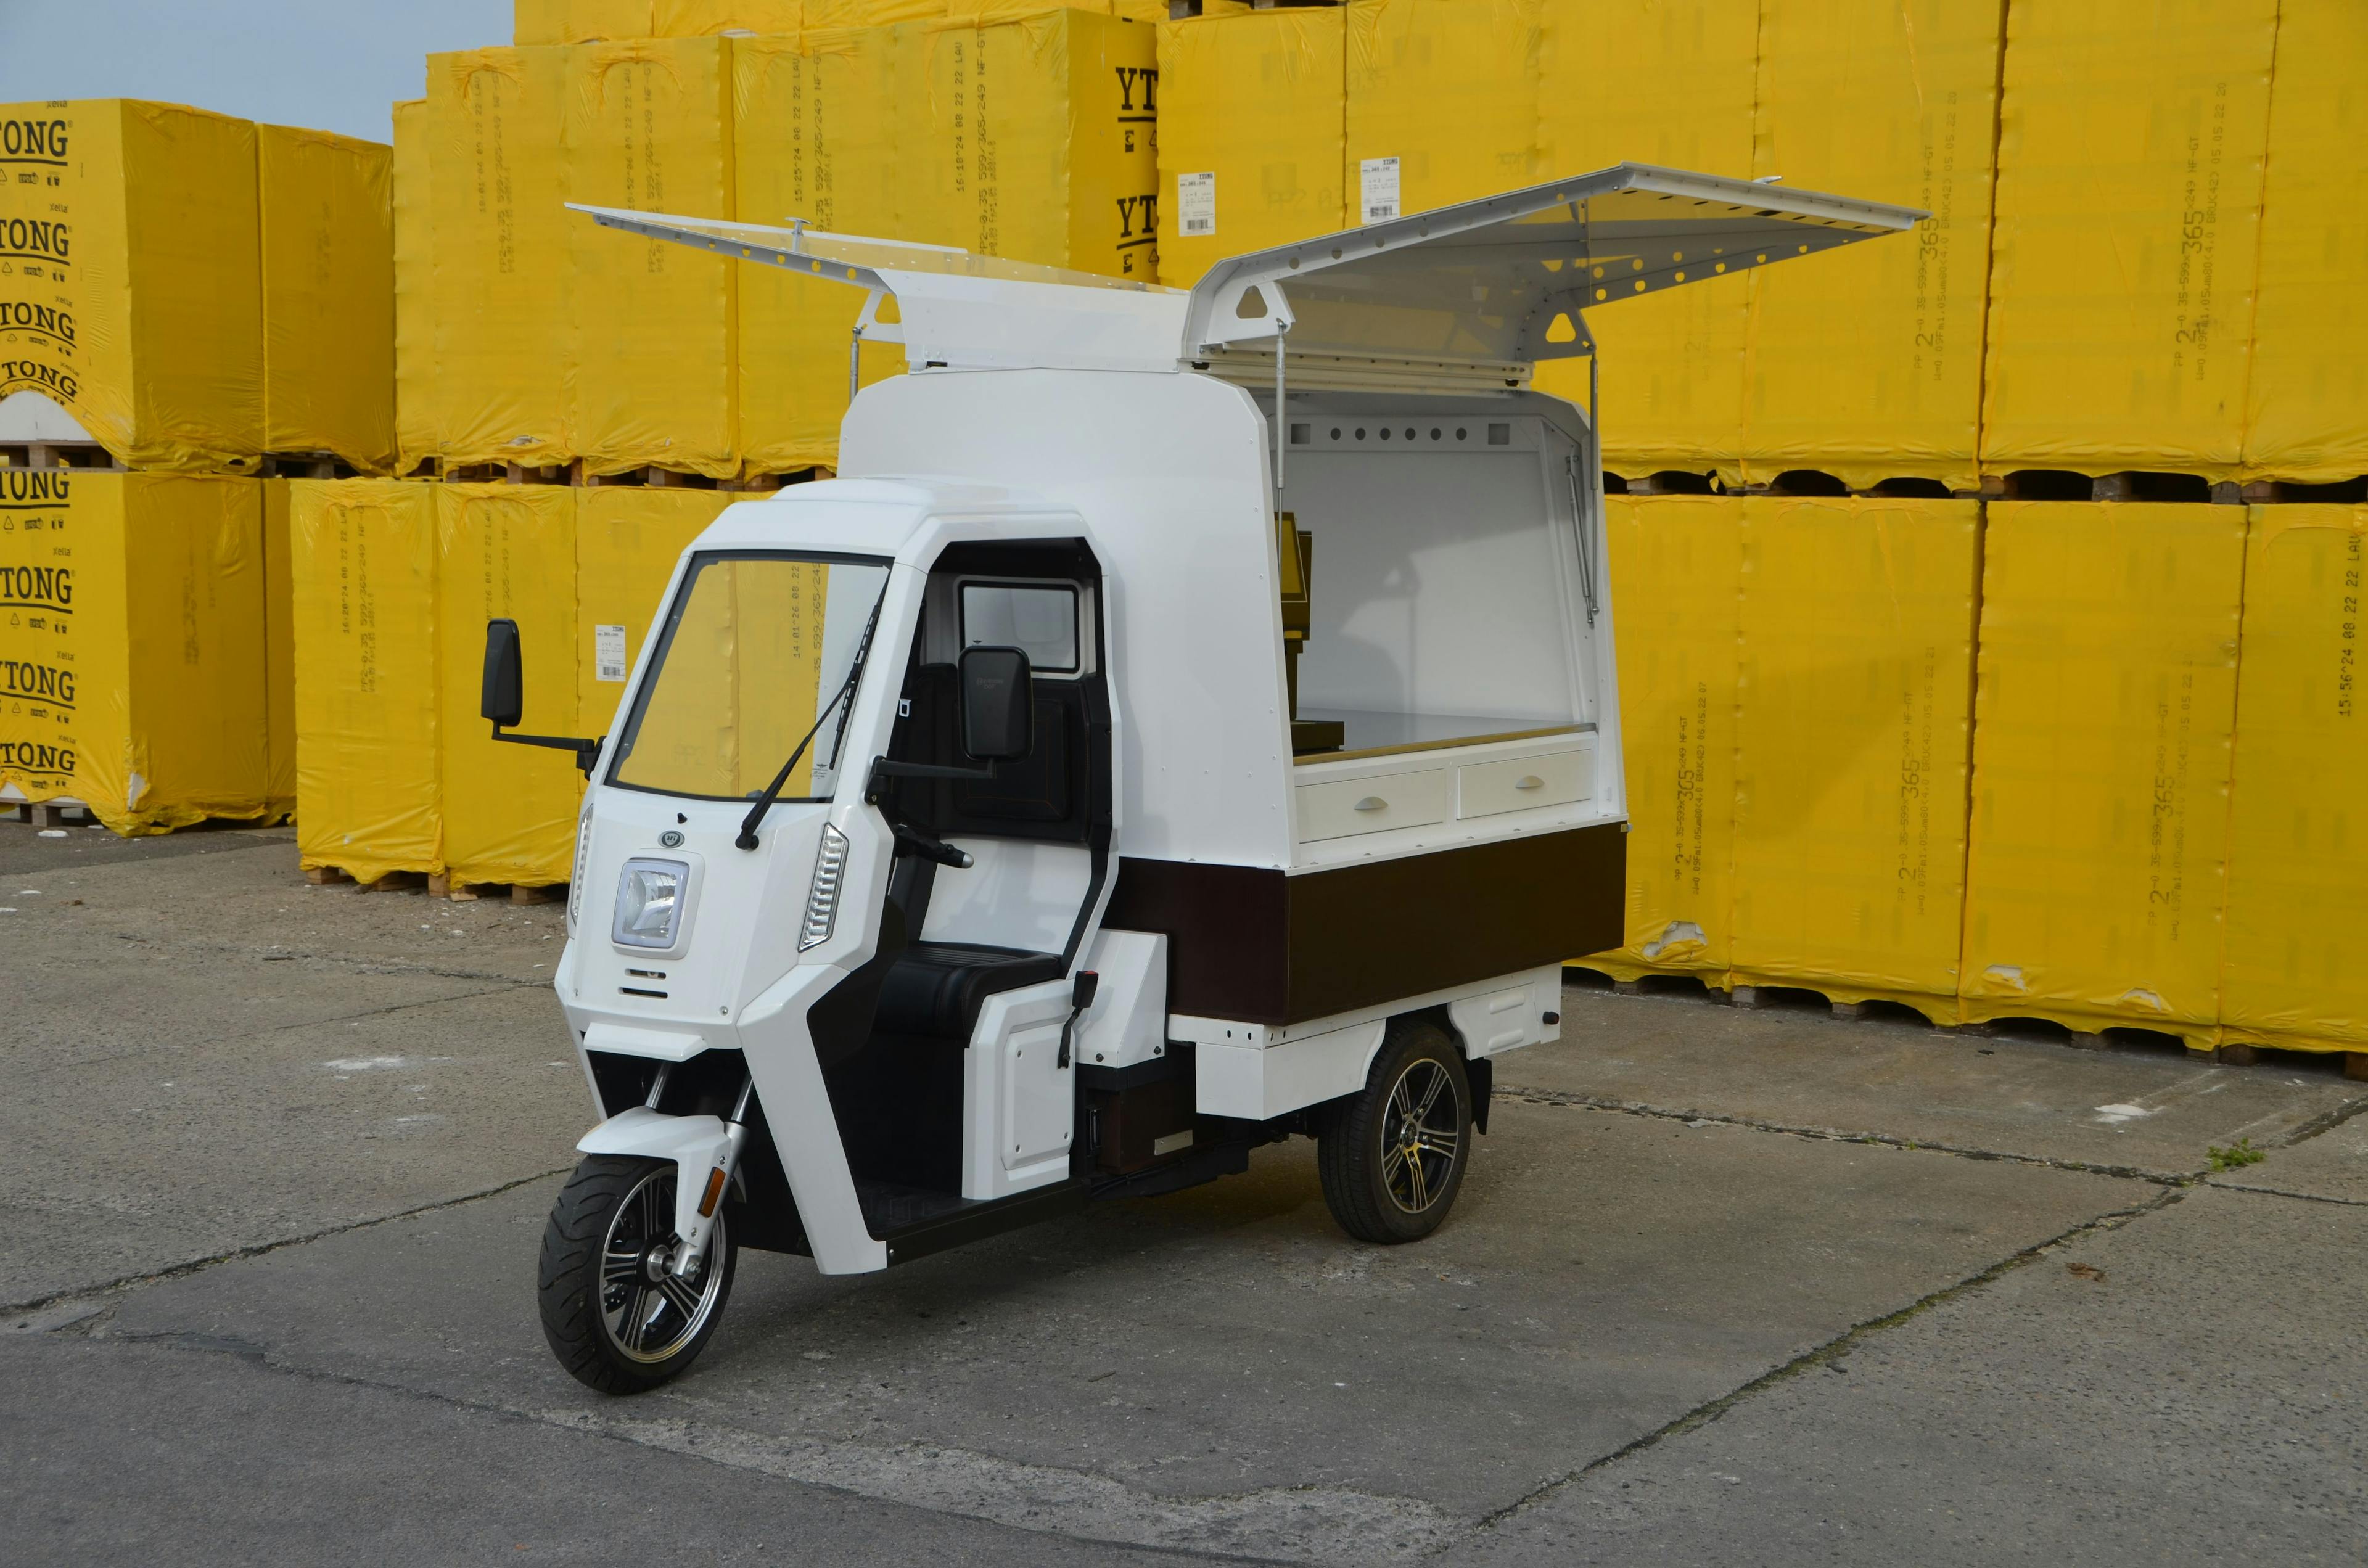 Cargo Moped ARI 345 Food Truck